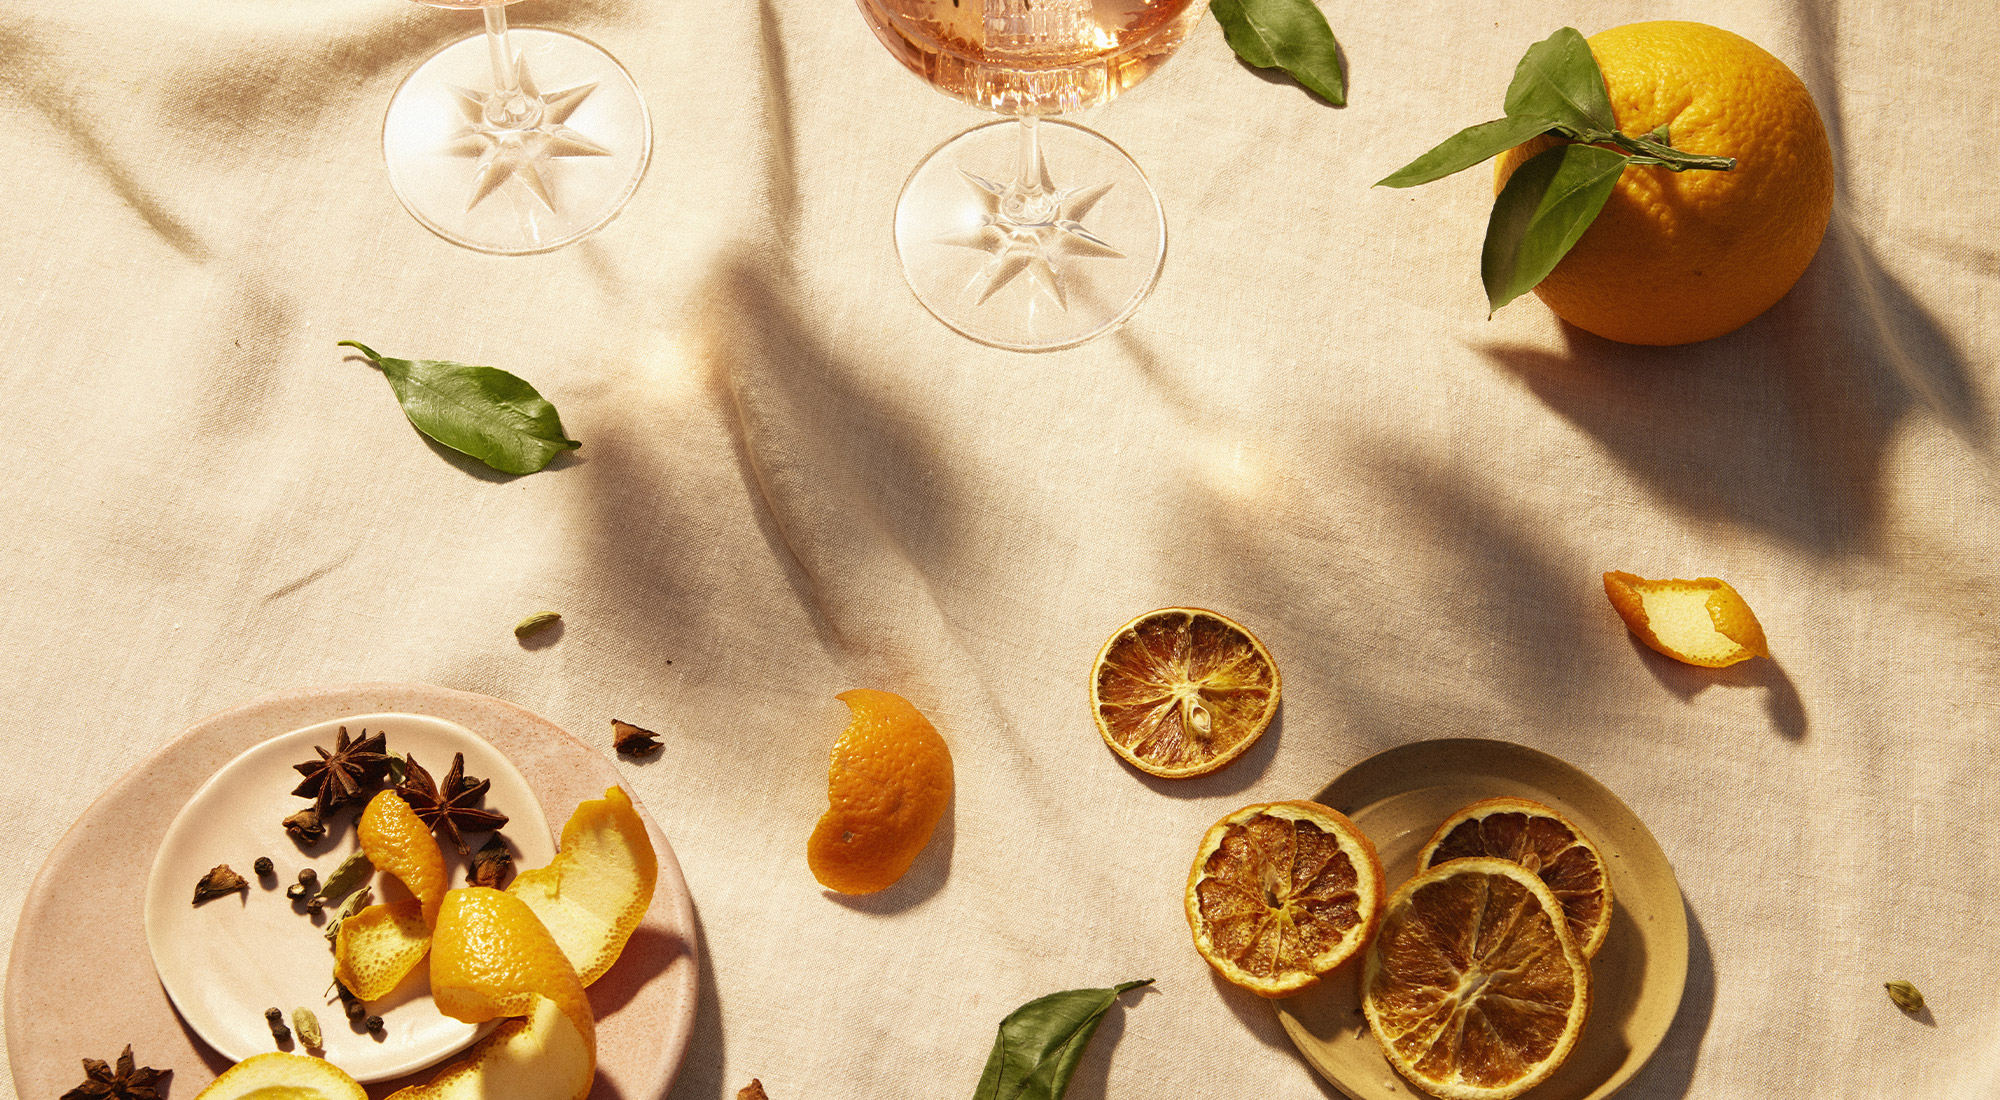 Moët Hennessy's Chandon Garden Spritz - Product Launch - Just Drinks